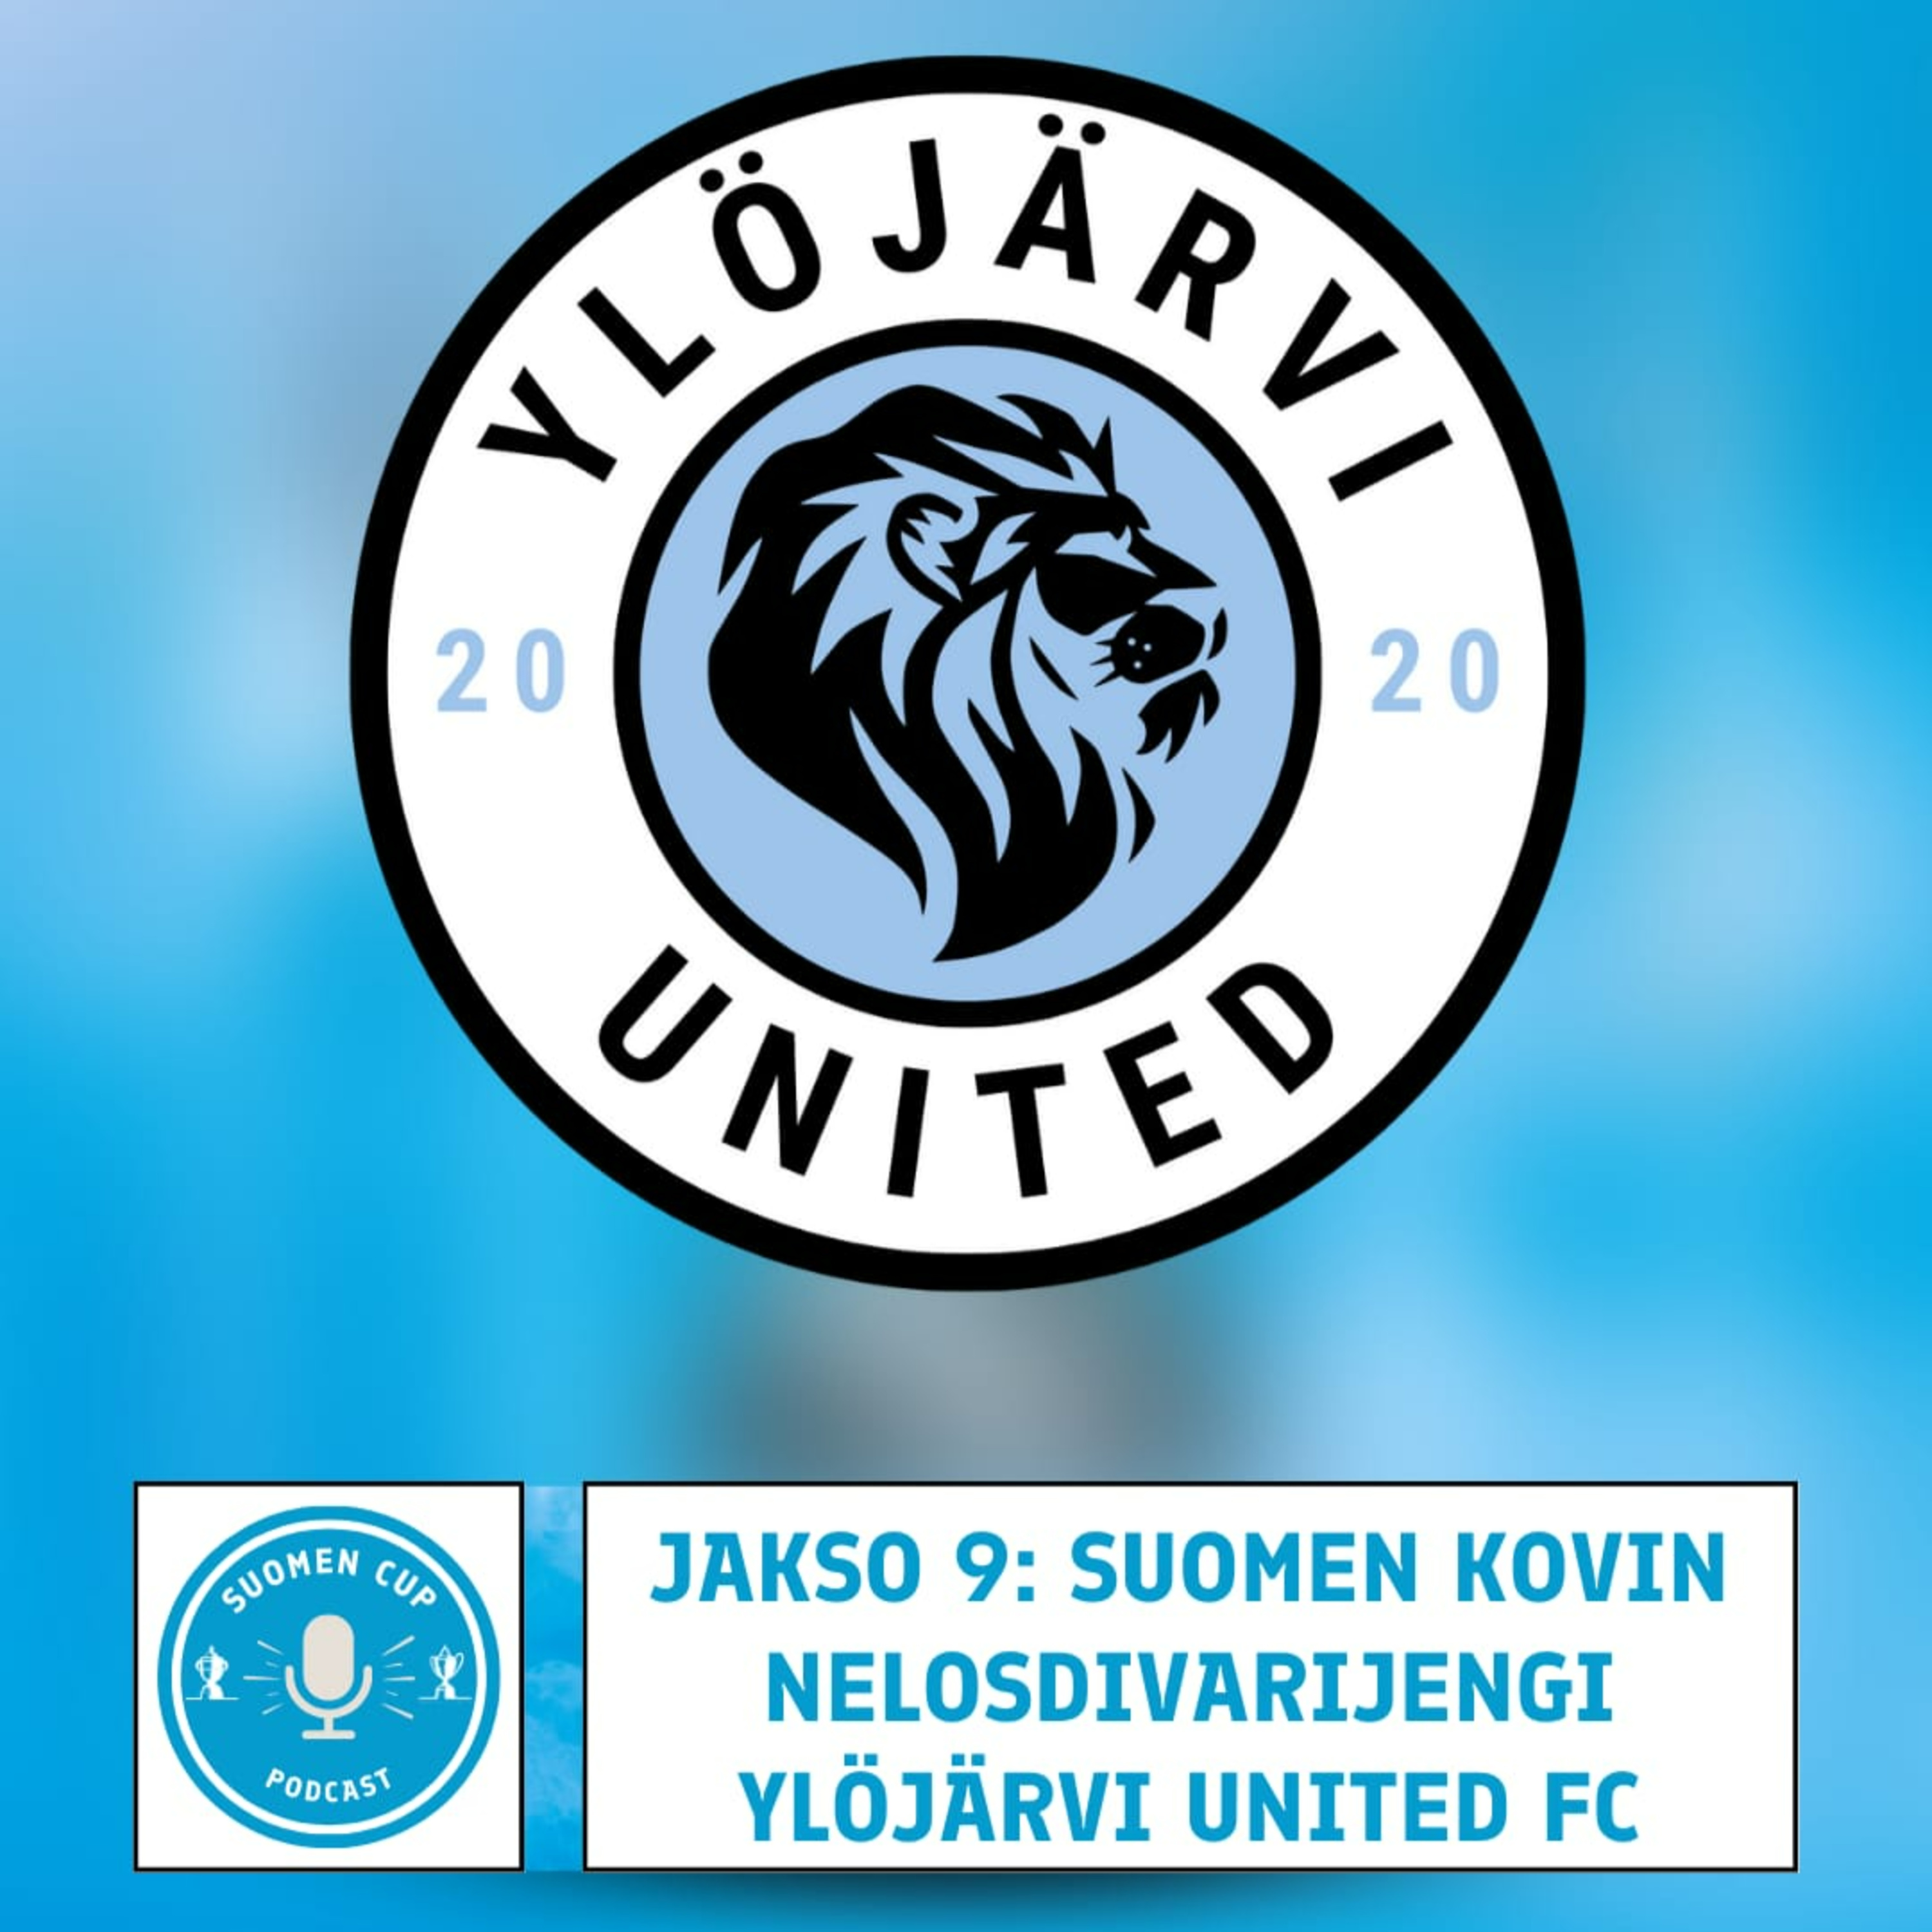 9. Ylöjärvi United FC - Suomen kovin 4.divarijengi